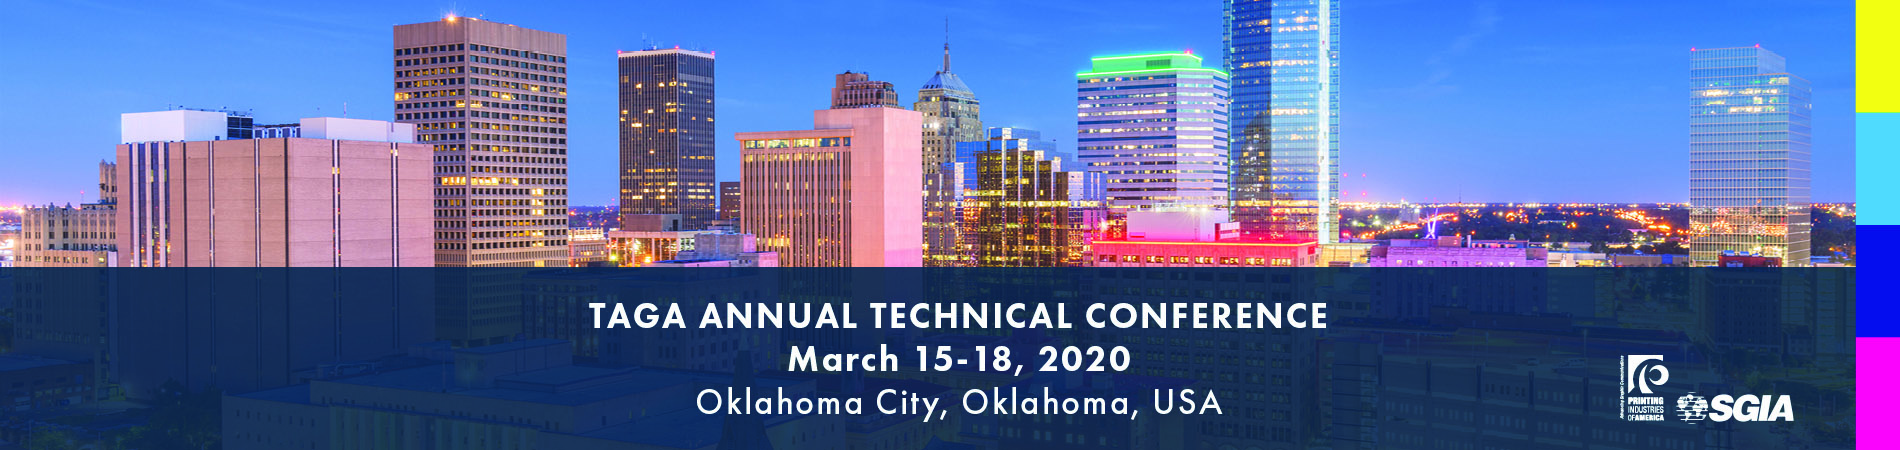 TAGA 2020 Annual Technical Conference